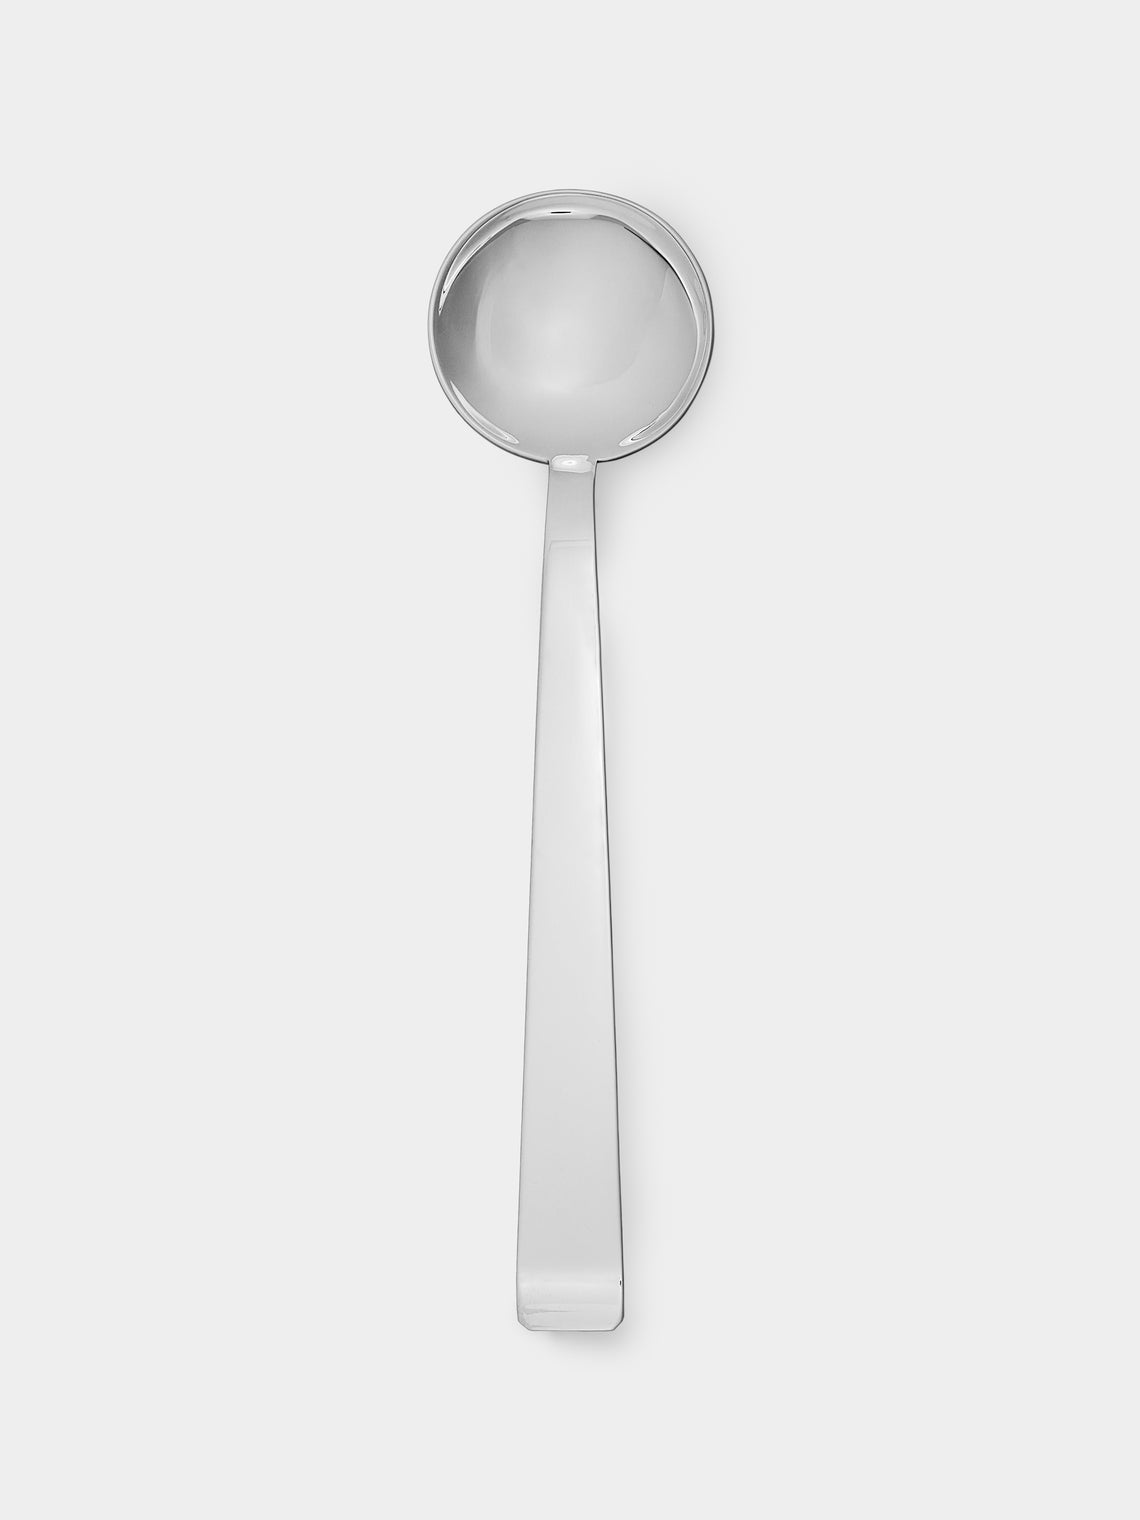 Wiener Silber Manufactur - Josef Hoffmann 135 Silver-Plated Cutlery - Silver - ABASK